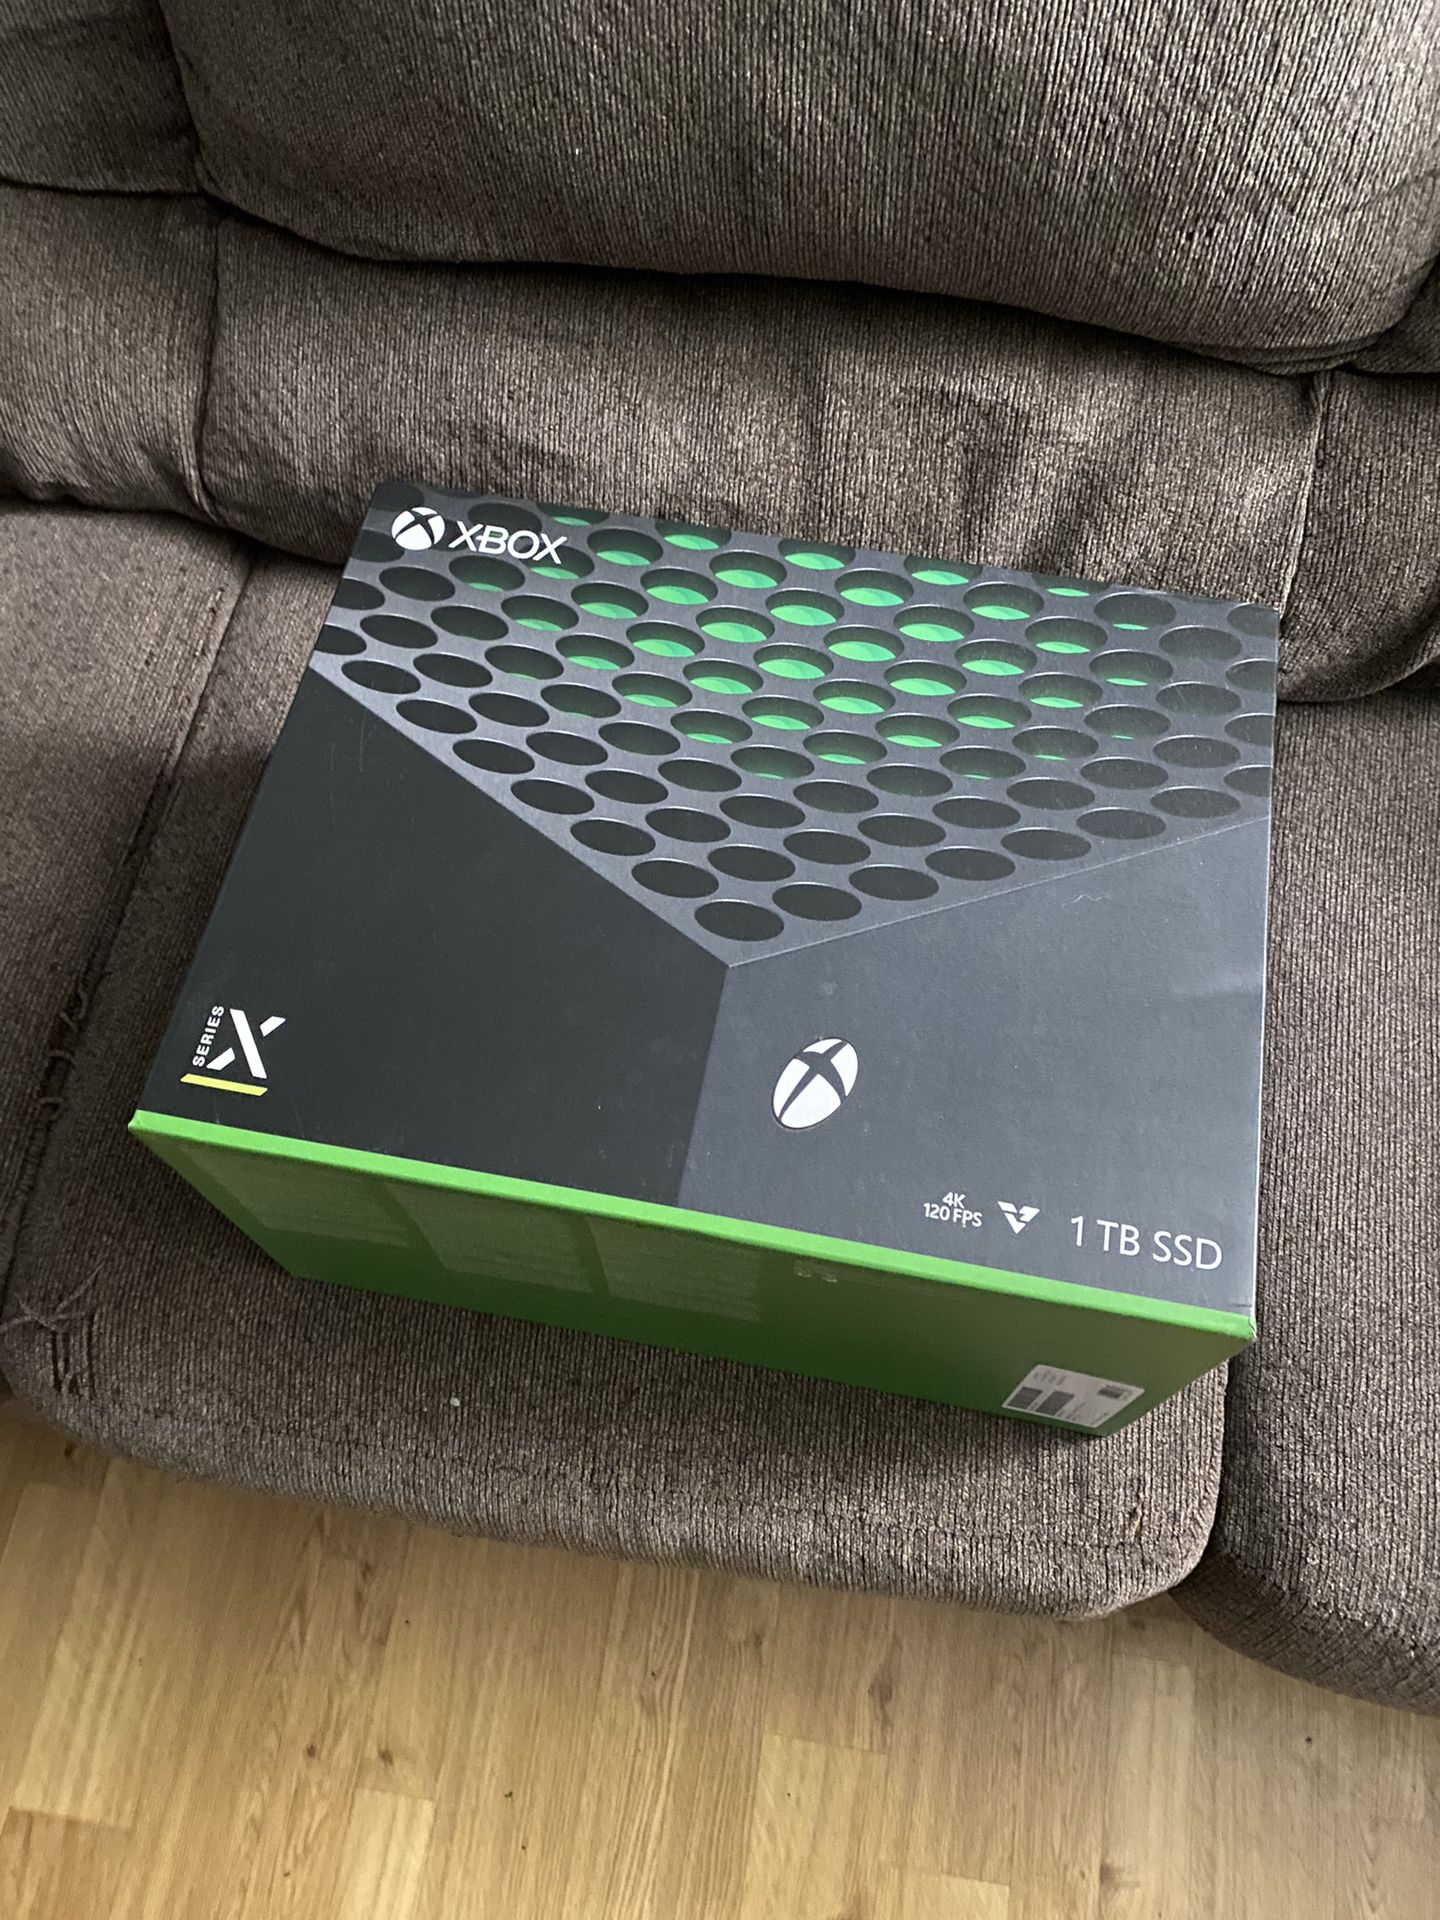 Xbox Series X BOX Only